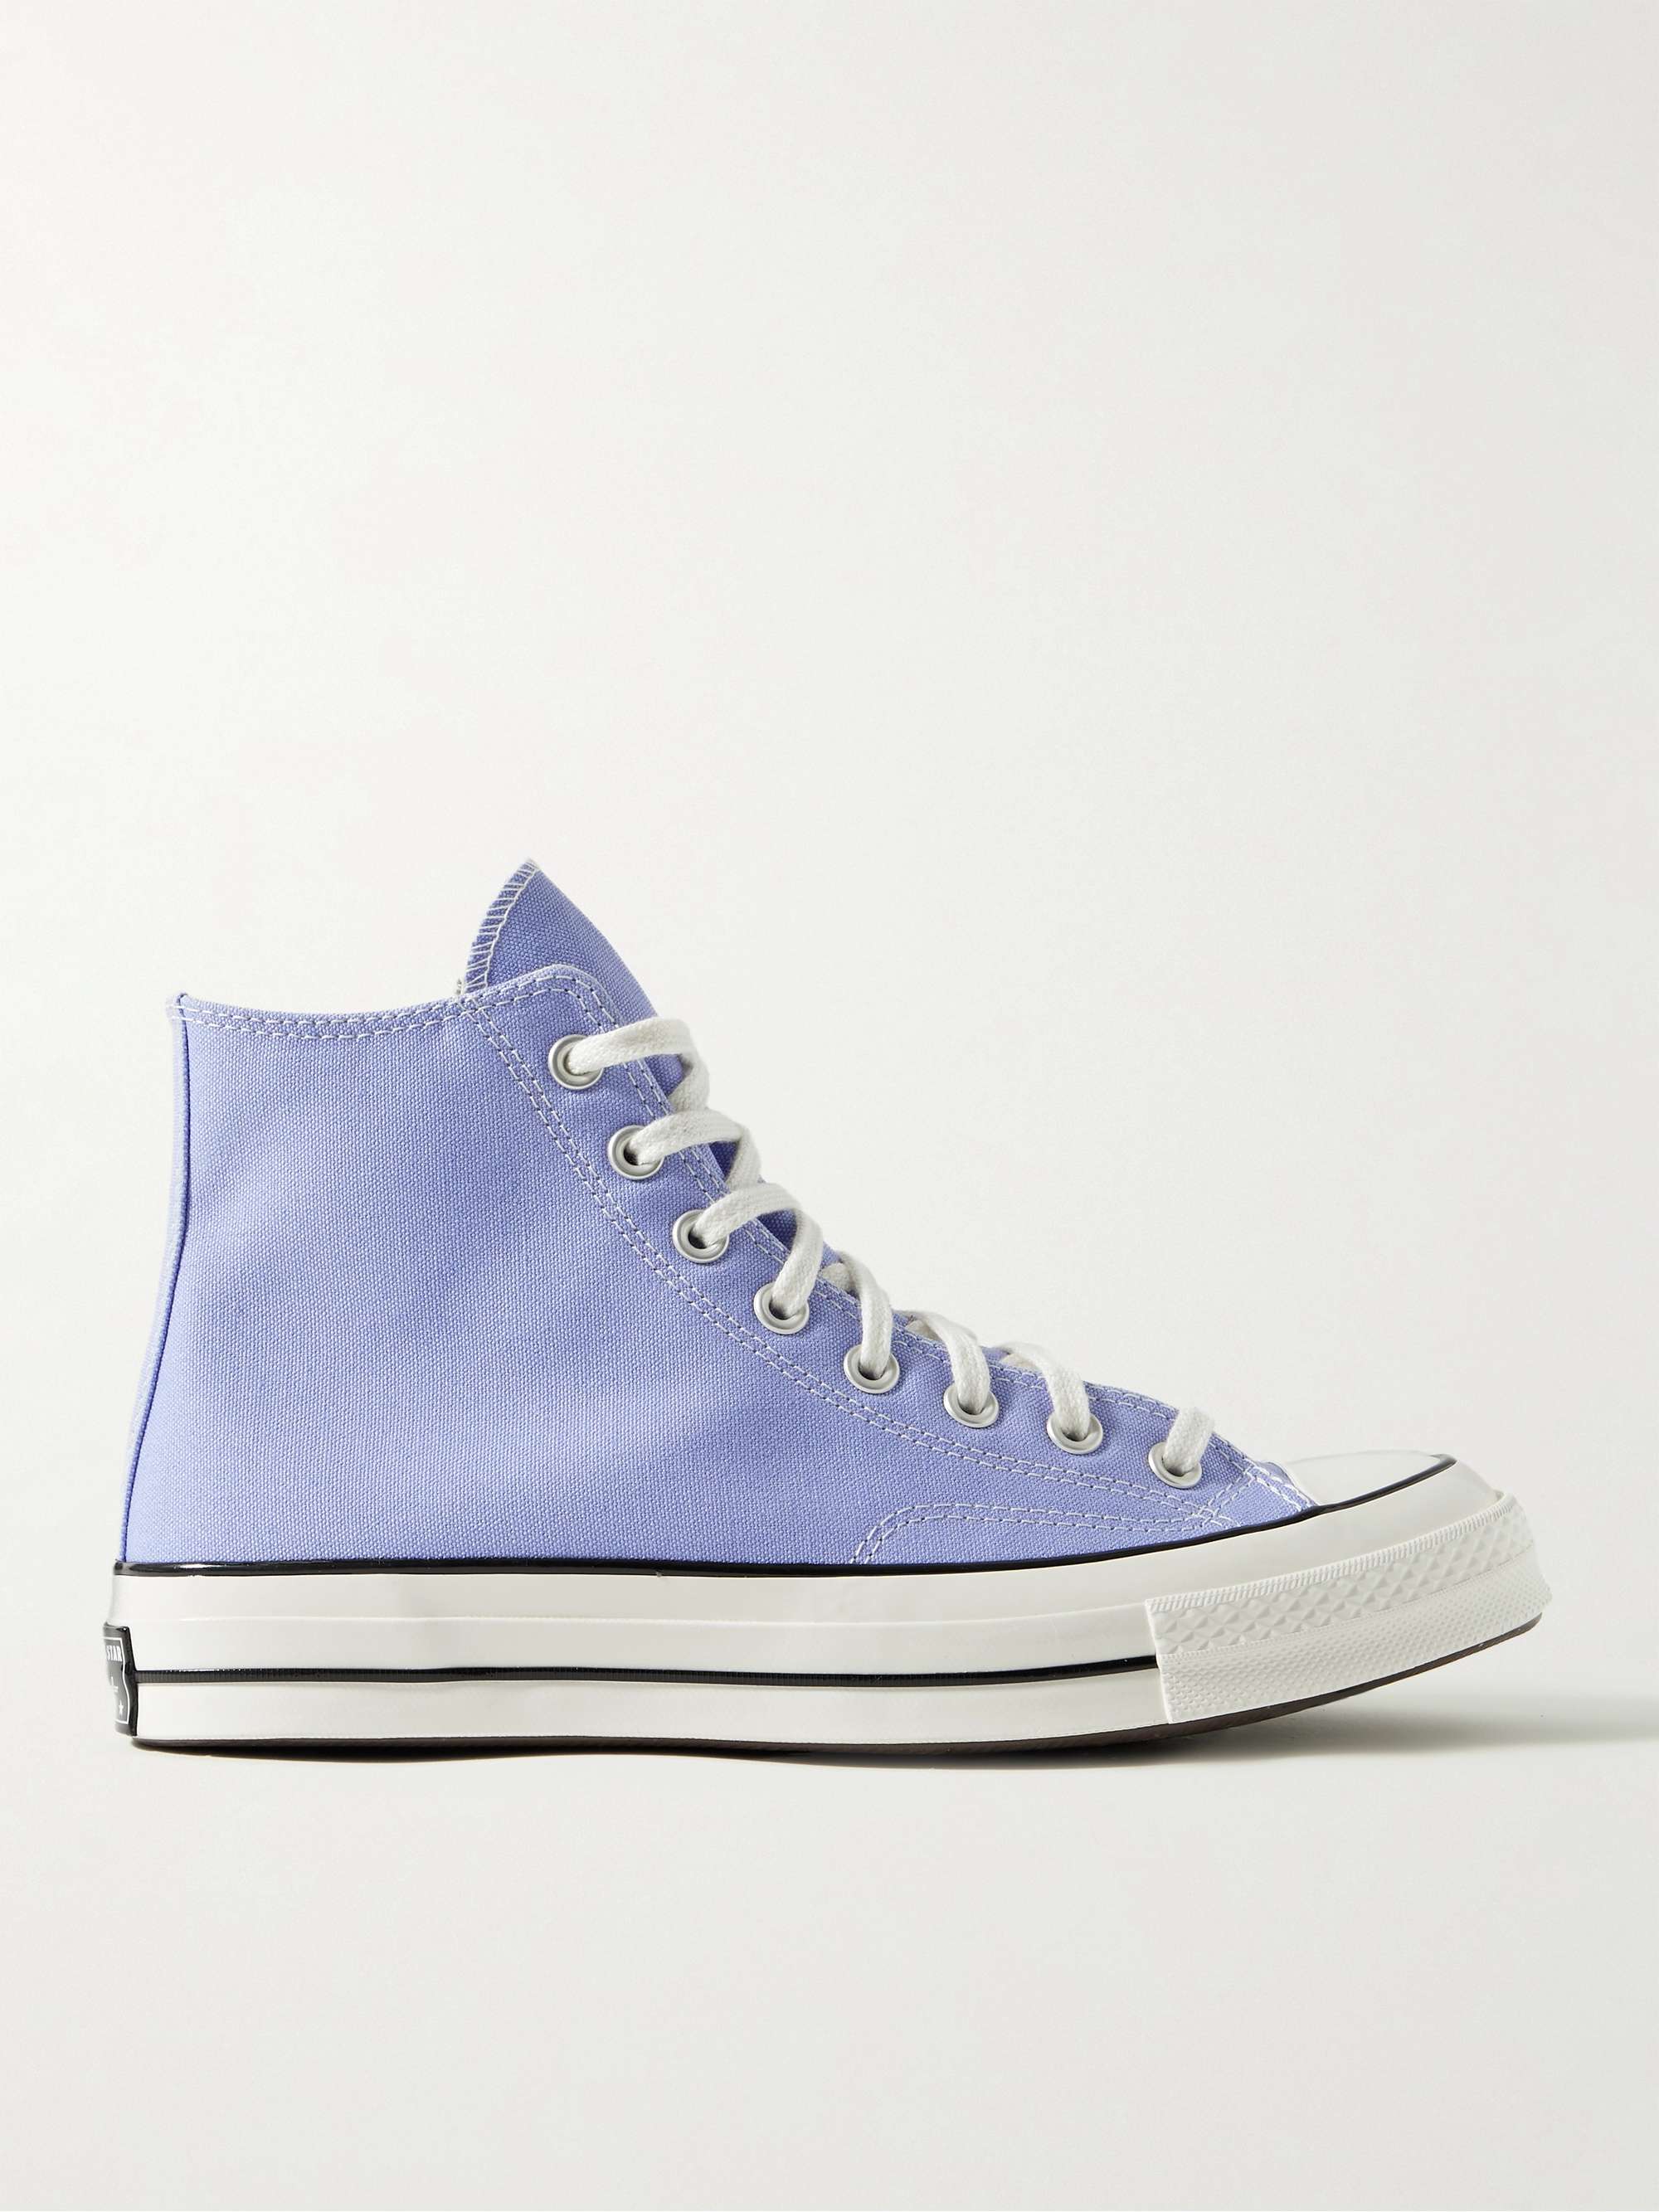 Converse Chuck 70 Craft Mix High Top Sneaker in Blue for Men